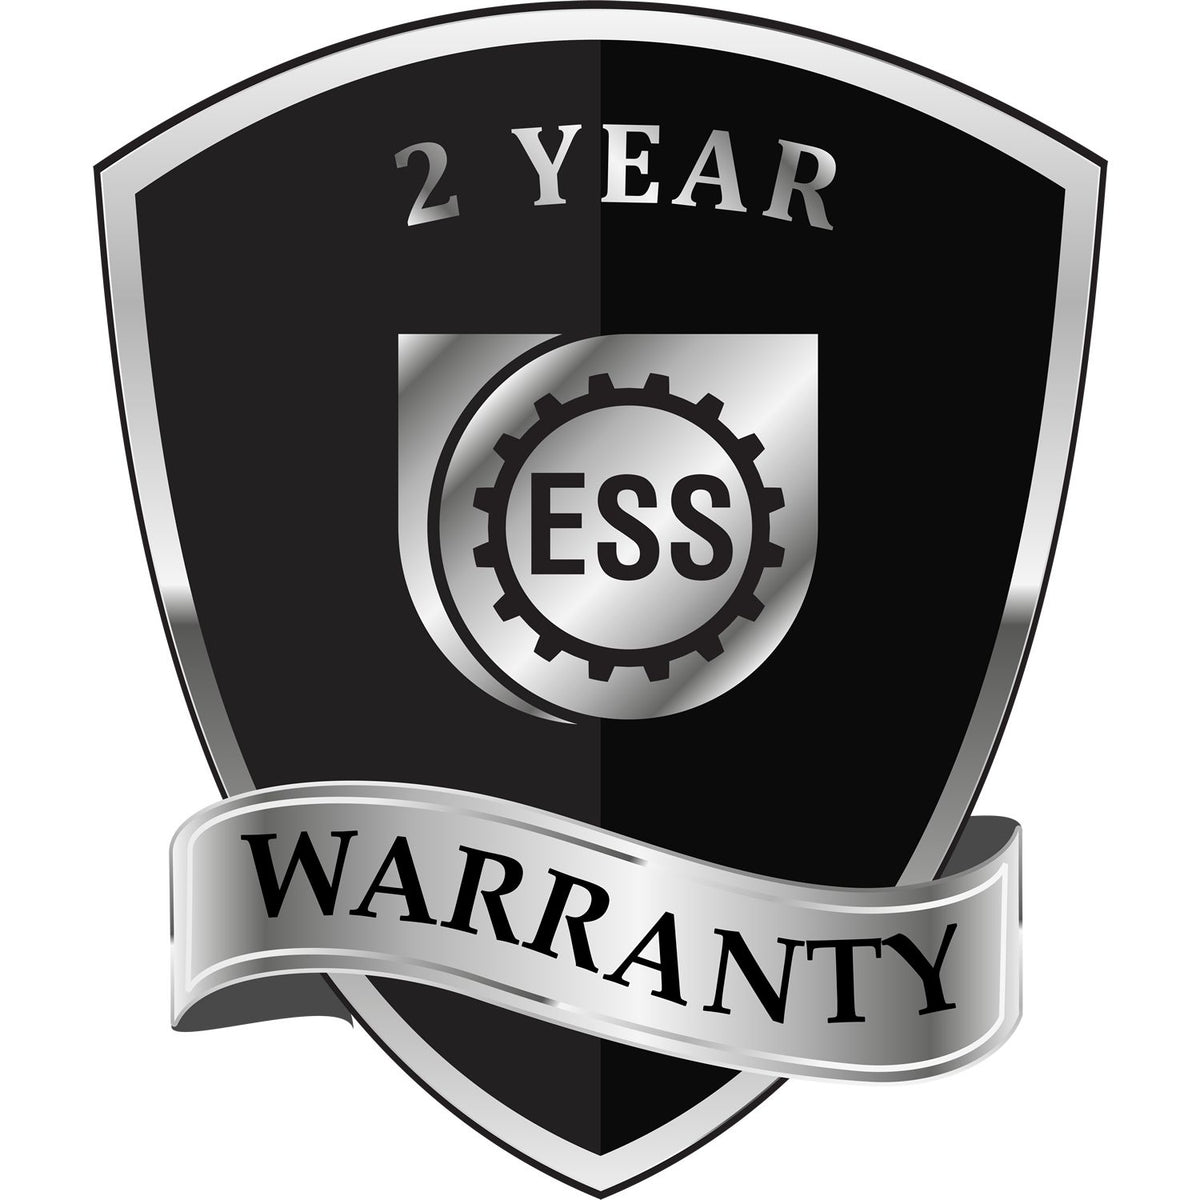 A badge or emblem showing a warranty icon for the Handheld Alabama Land Surveyor Seal